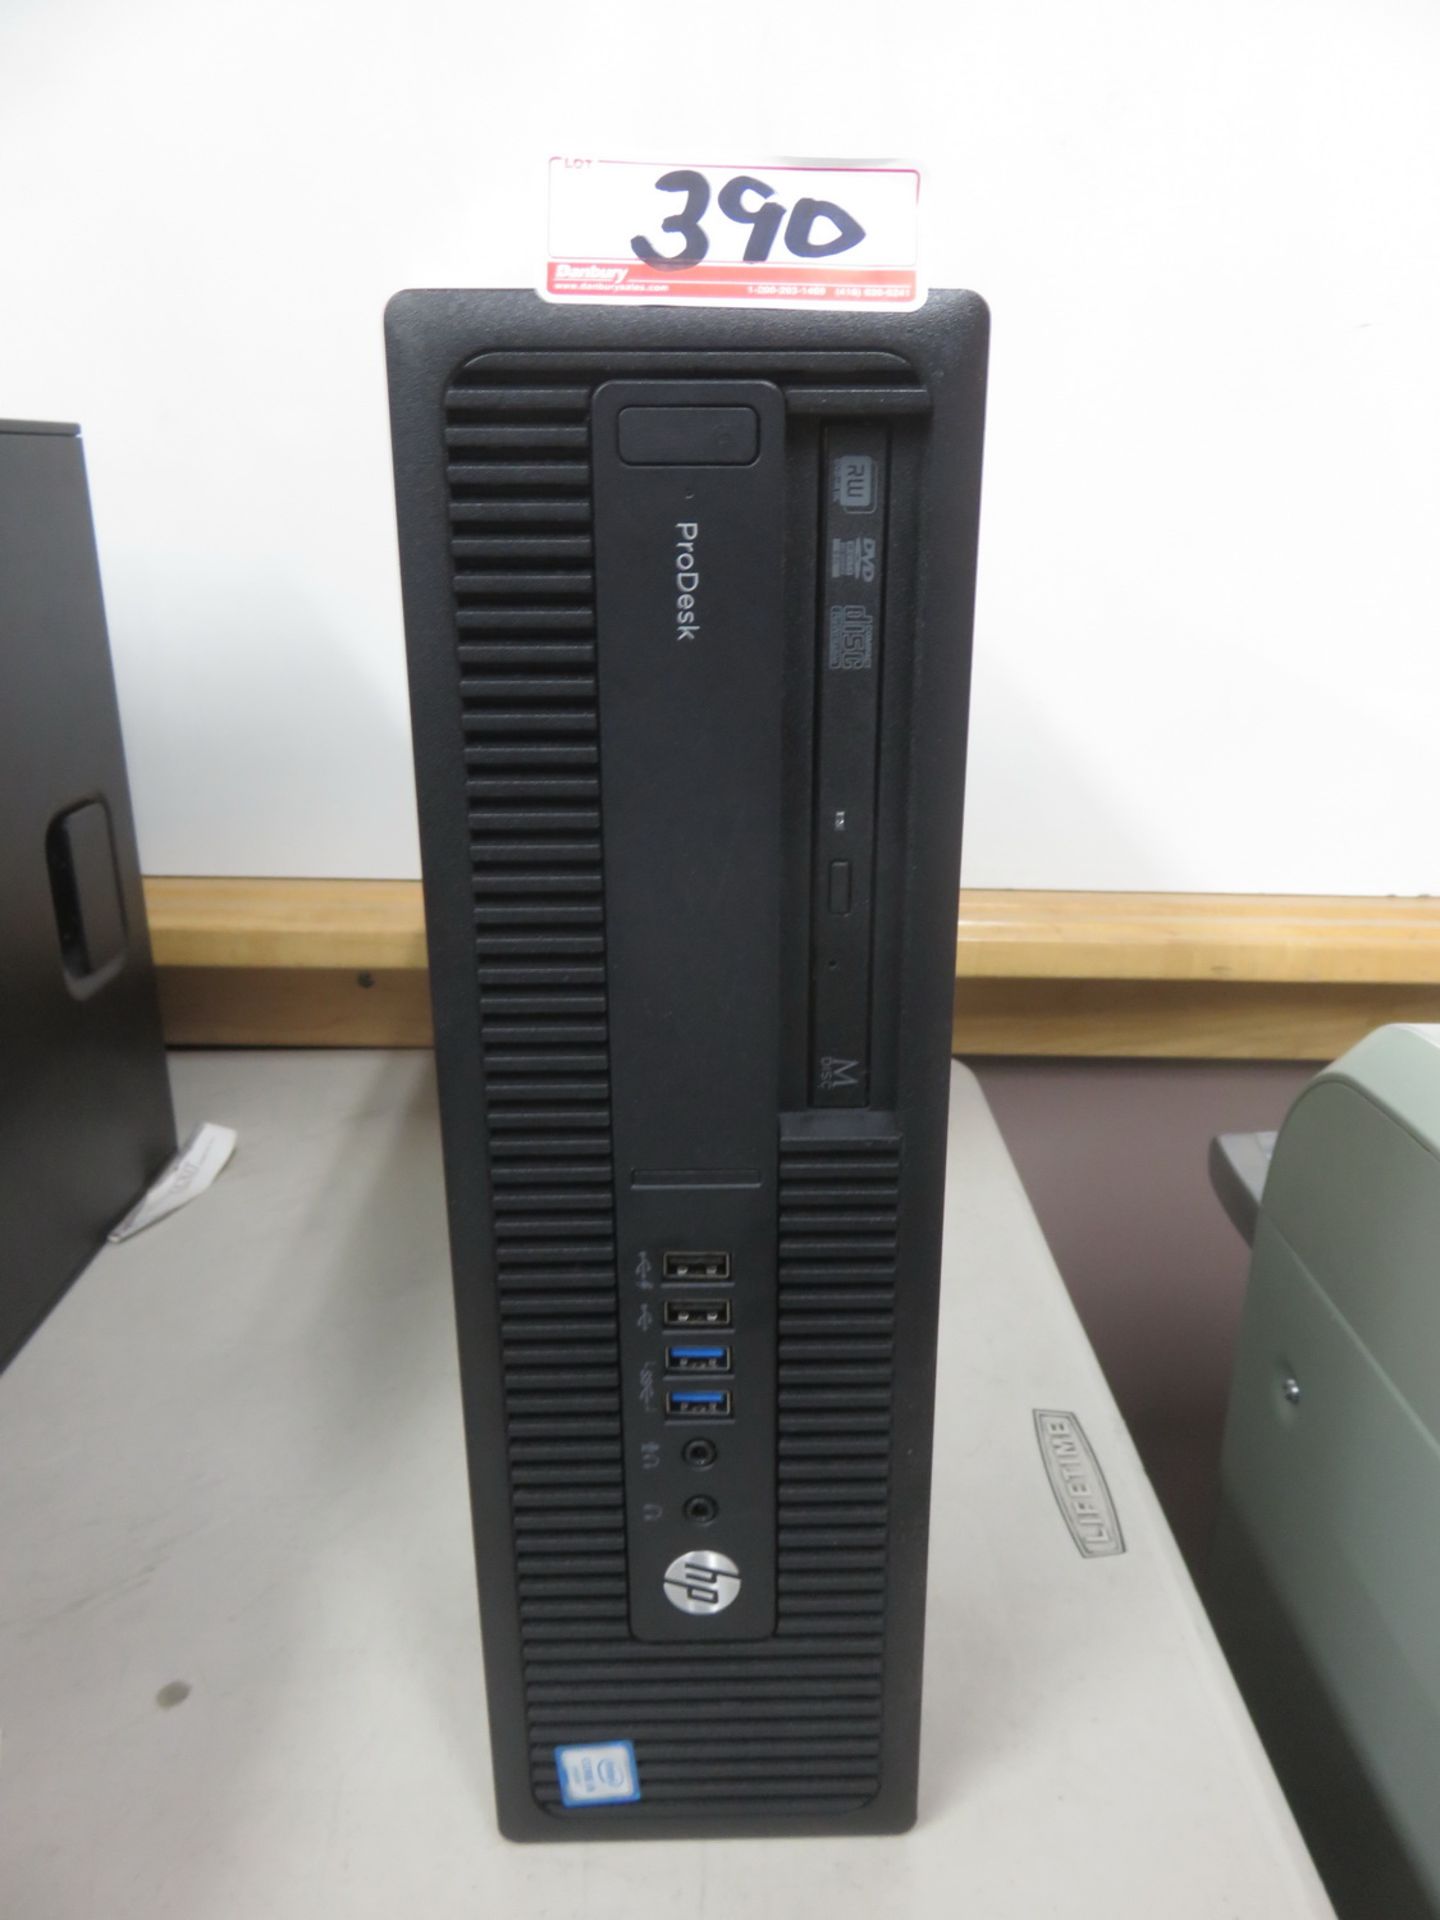 HP PRODESK 600 G2 SFF PC W/ INTEL CORE I5-6500 3.2GHZ, 8GB RAM, 500GB HDD, WIN 10 PRO